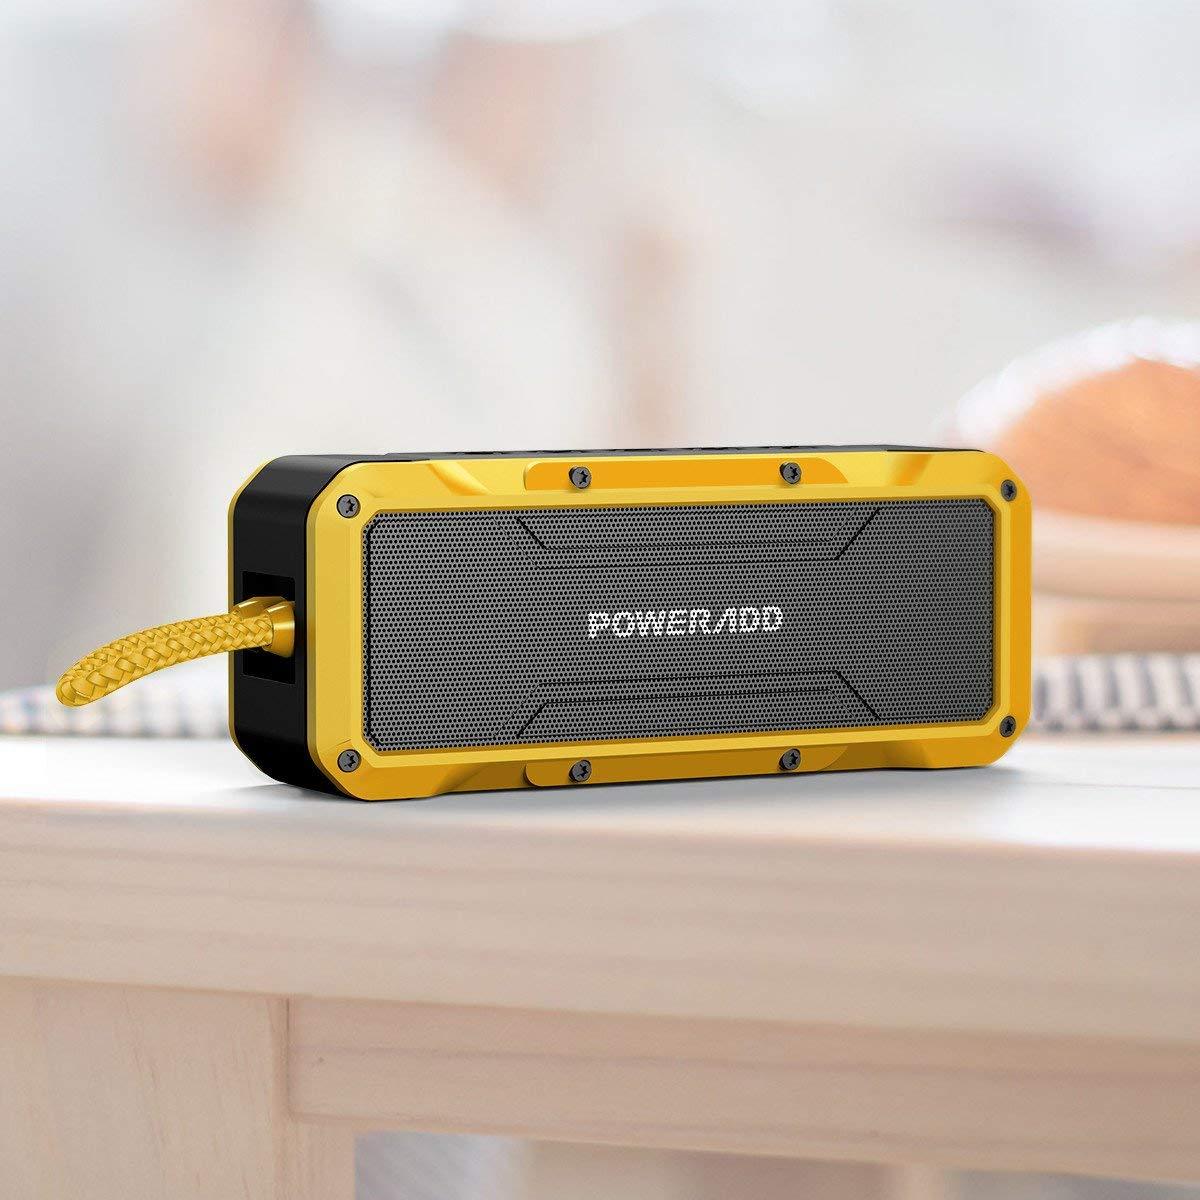 Poweradd MusicFly Indoor/Outdoor Portable Wireless Bluetooth Speakers